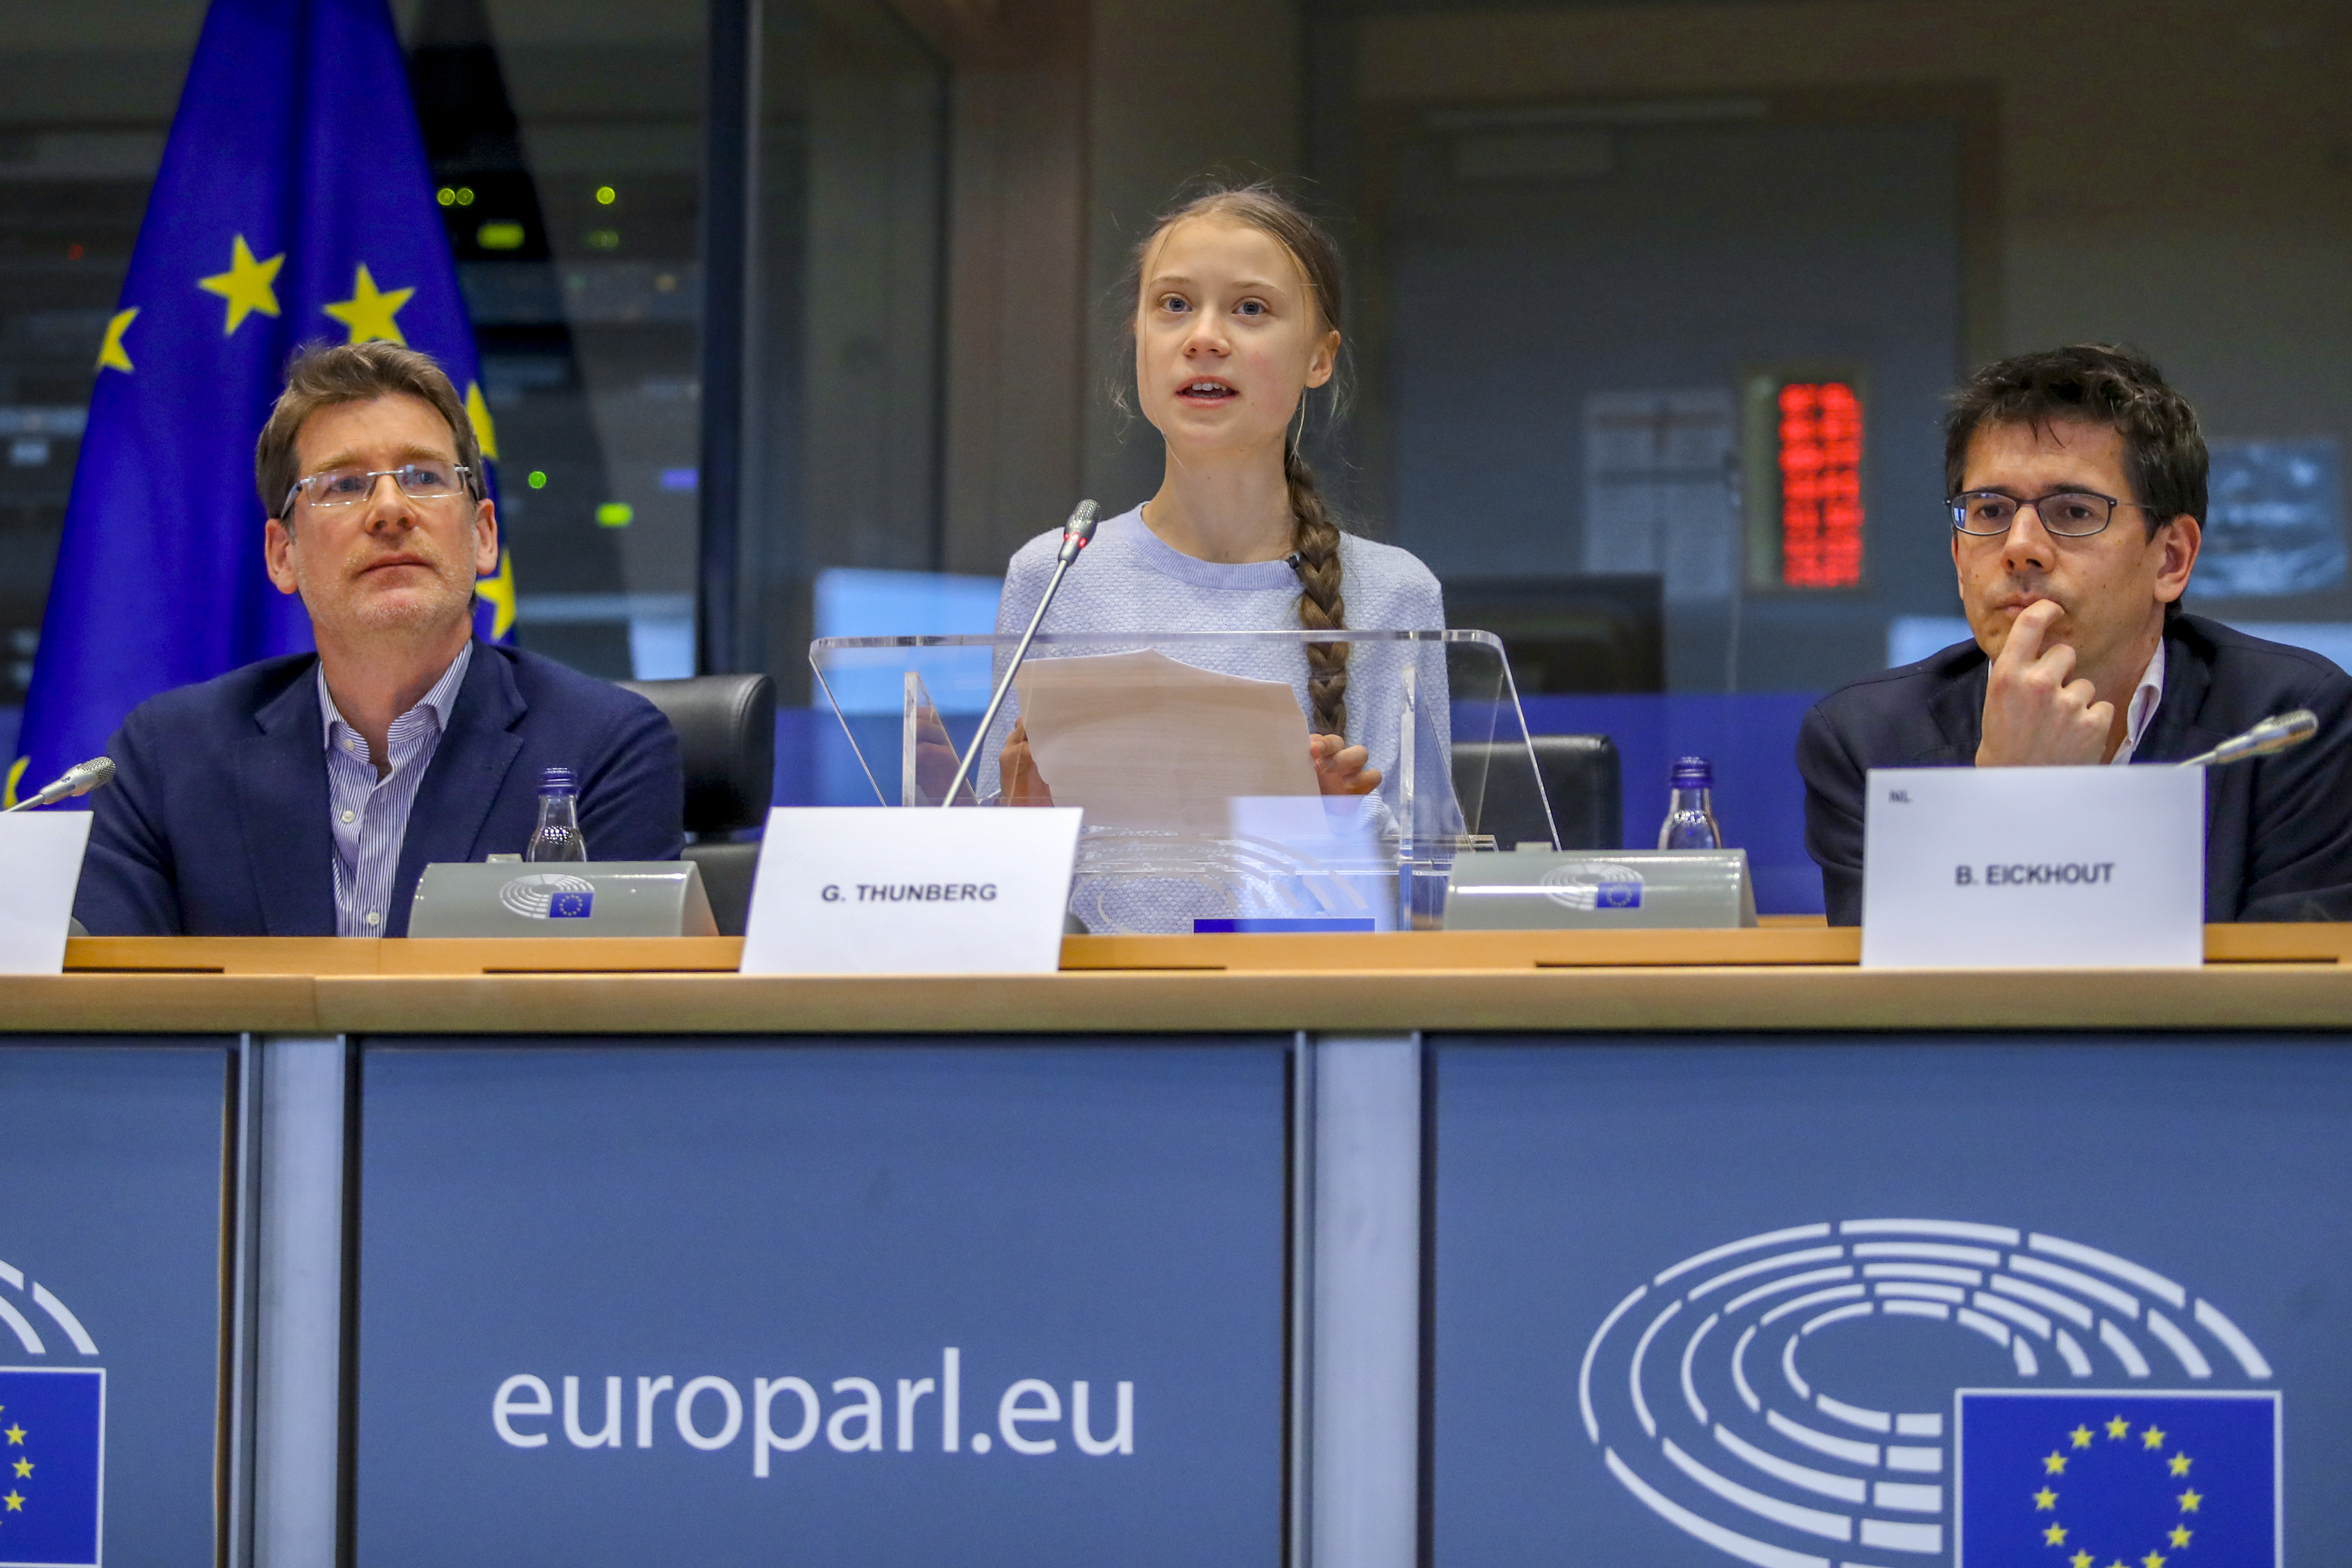 Swedish environmental activist Greta Thunberg giving a speech in the European Parliament on March 4, 2020